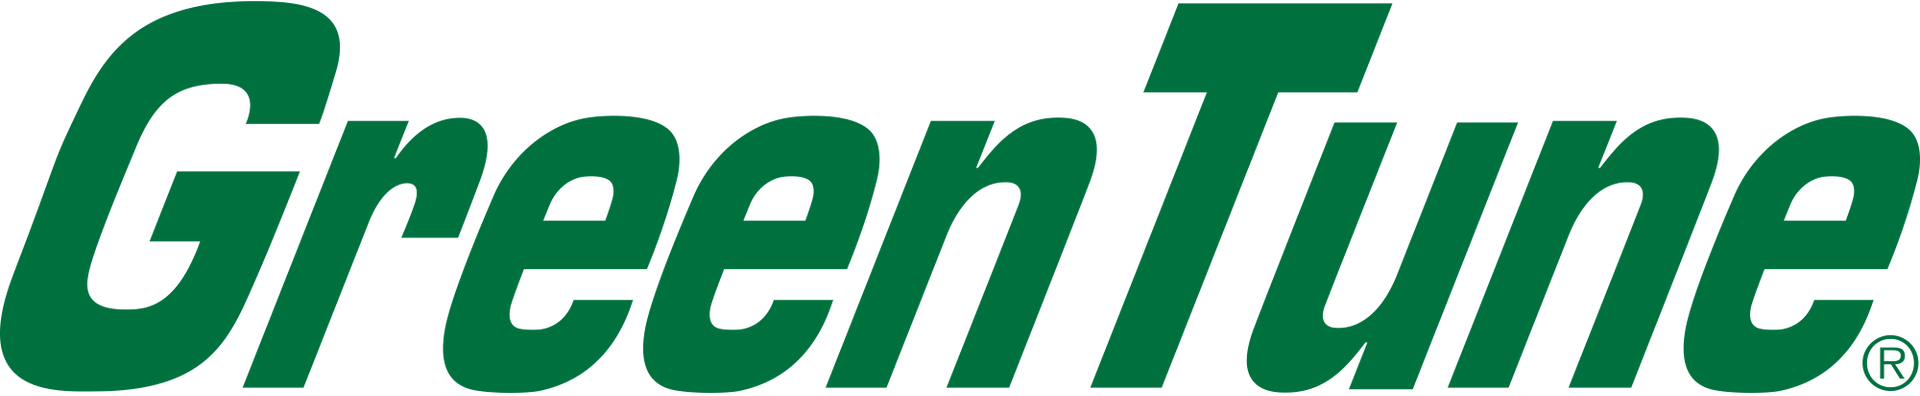 Greentune Automotive Products LLC - logo